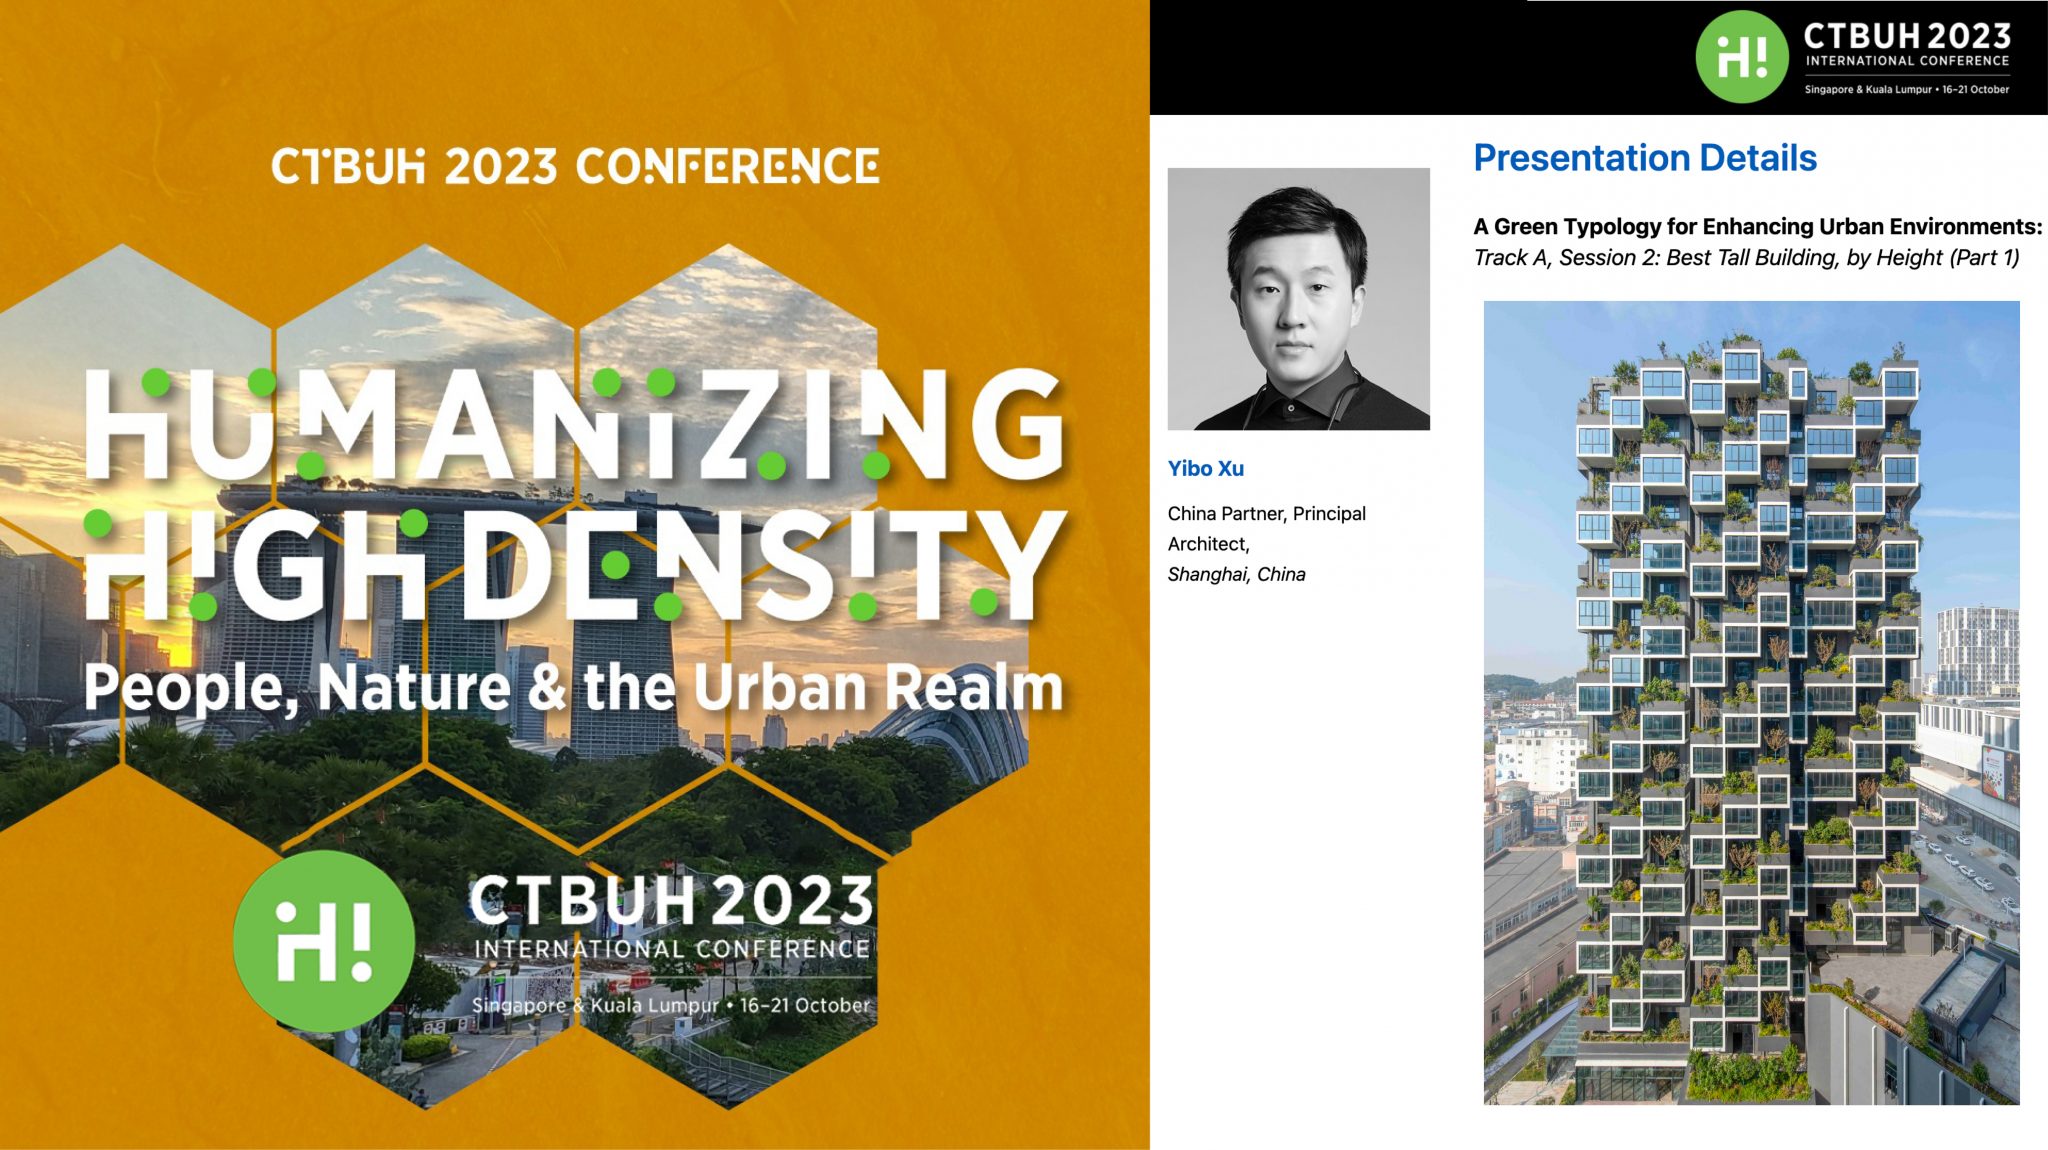 Yibo Xu a CTBUH International Conference